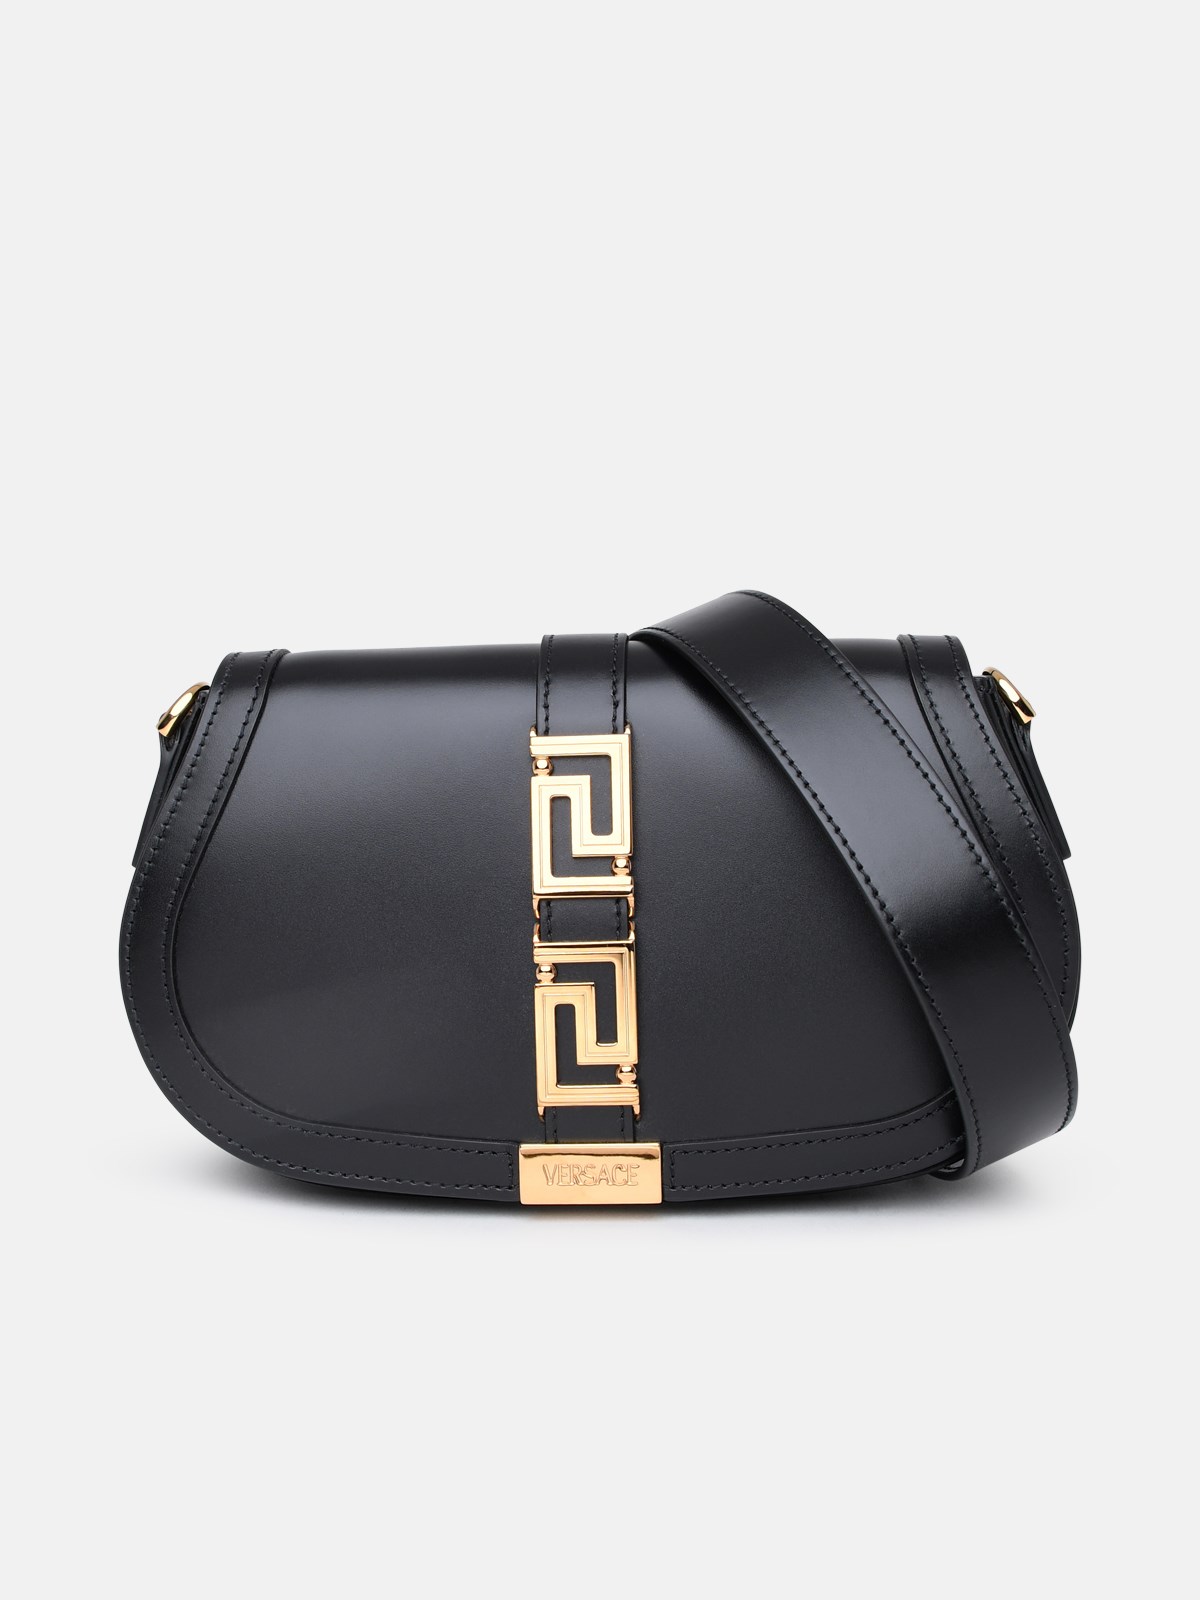 Versace Black Leather Greca Goddess Bag